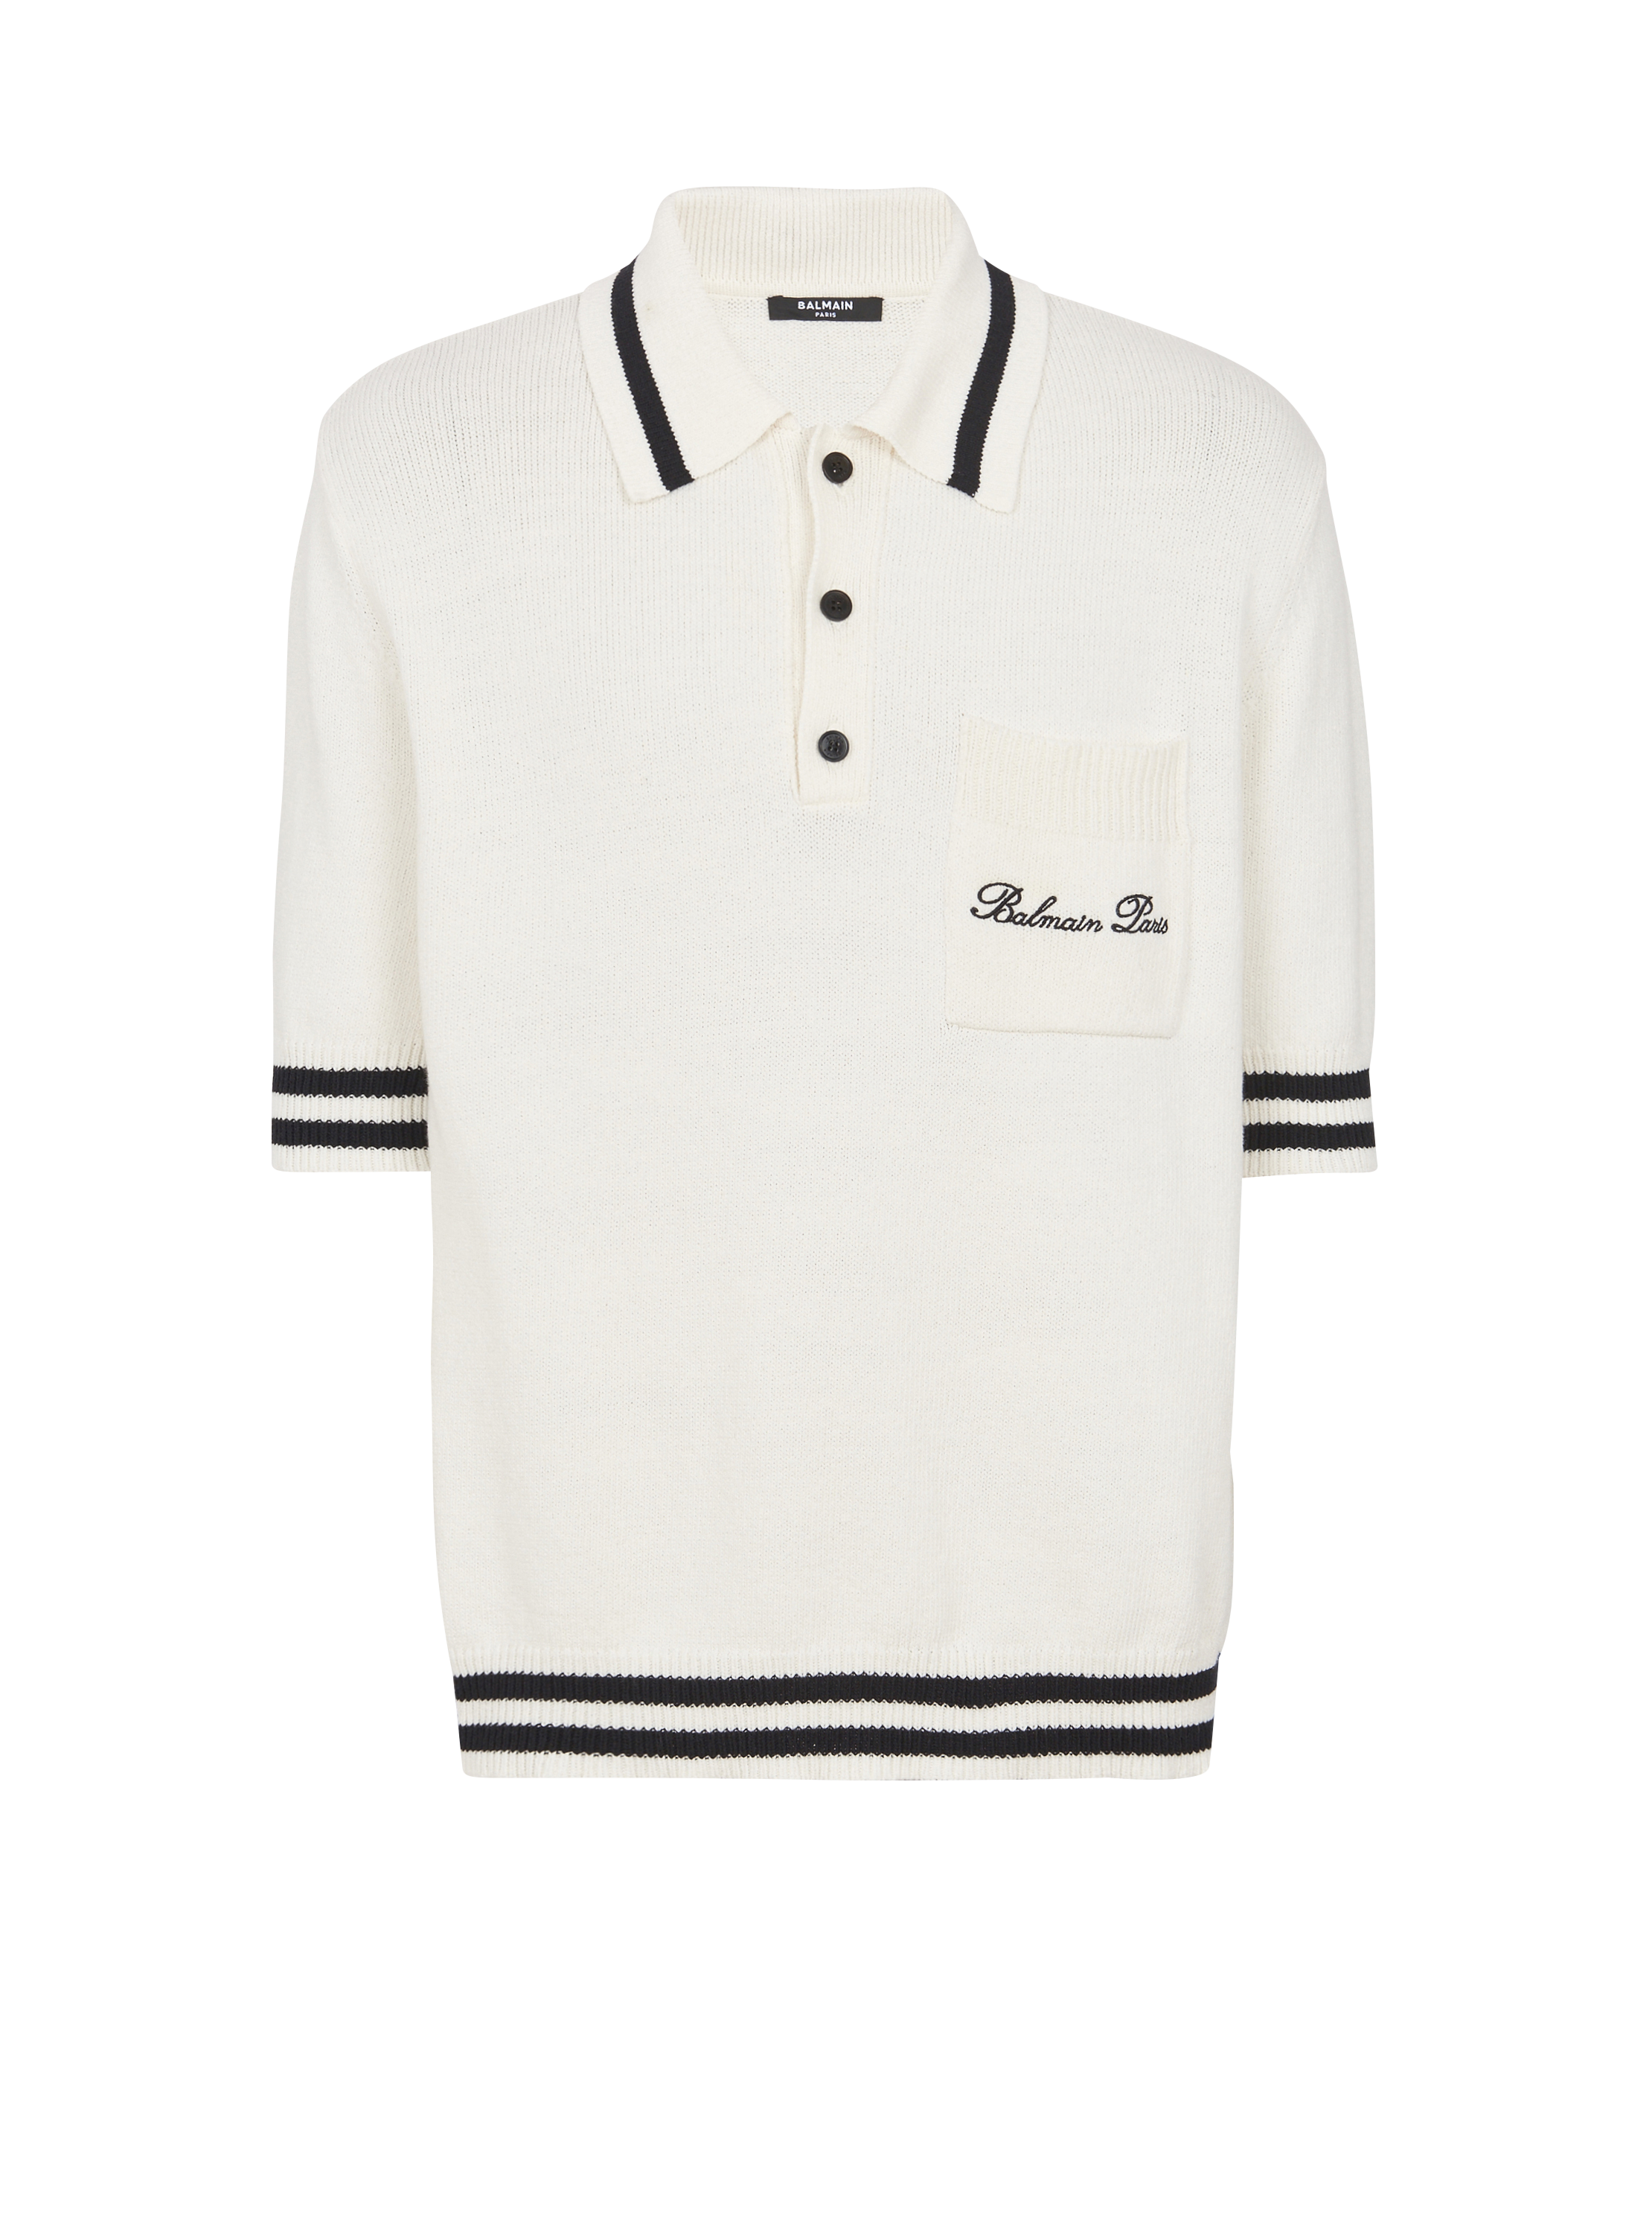 Balmain Signature polo shirt, white, hi-res